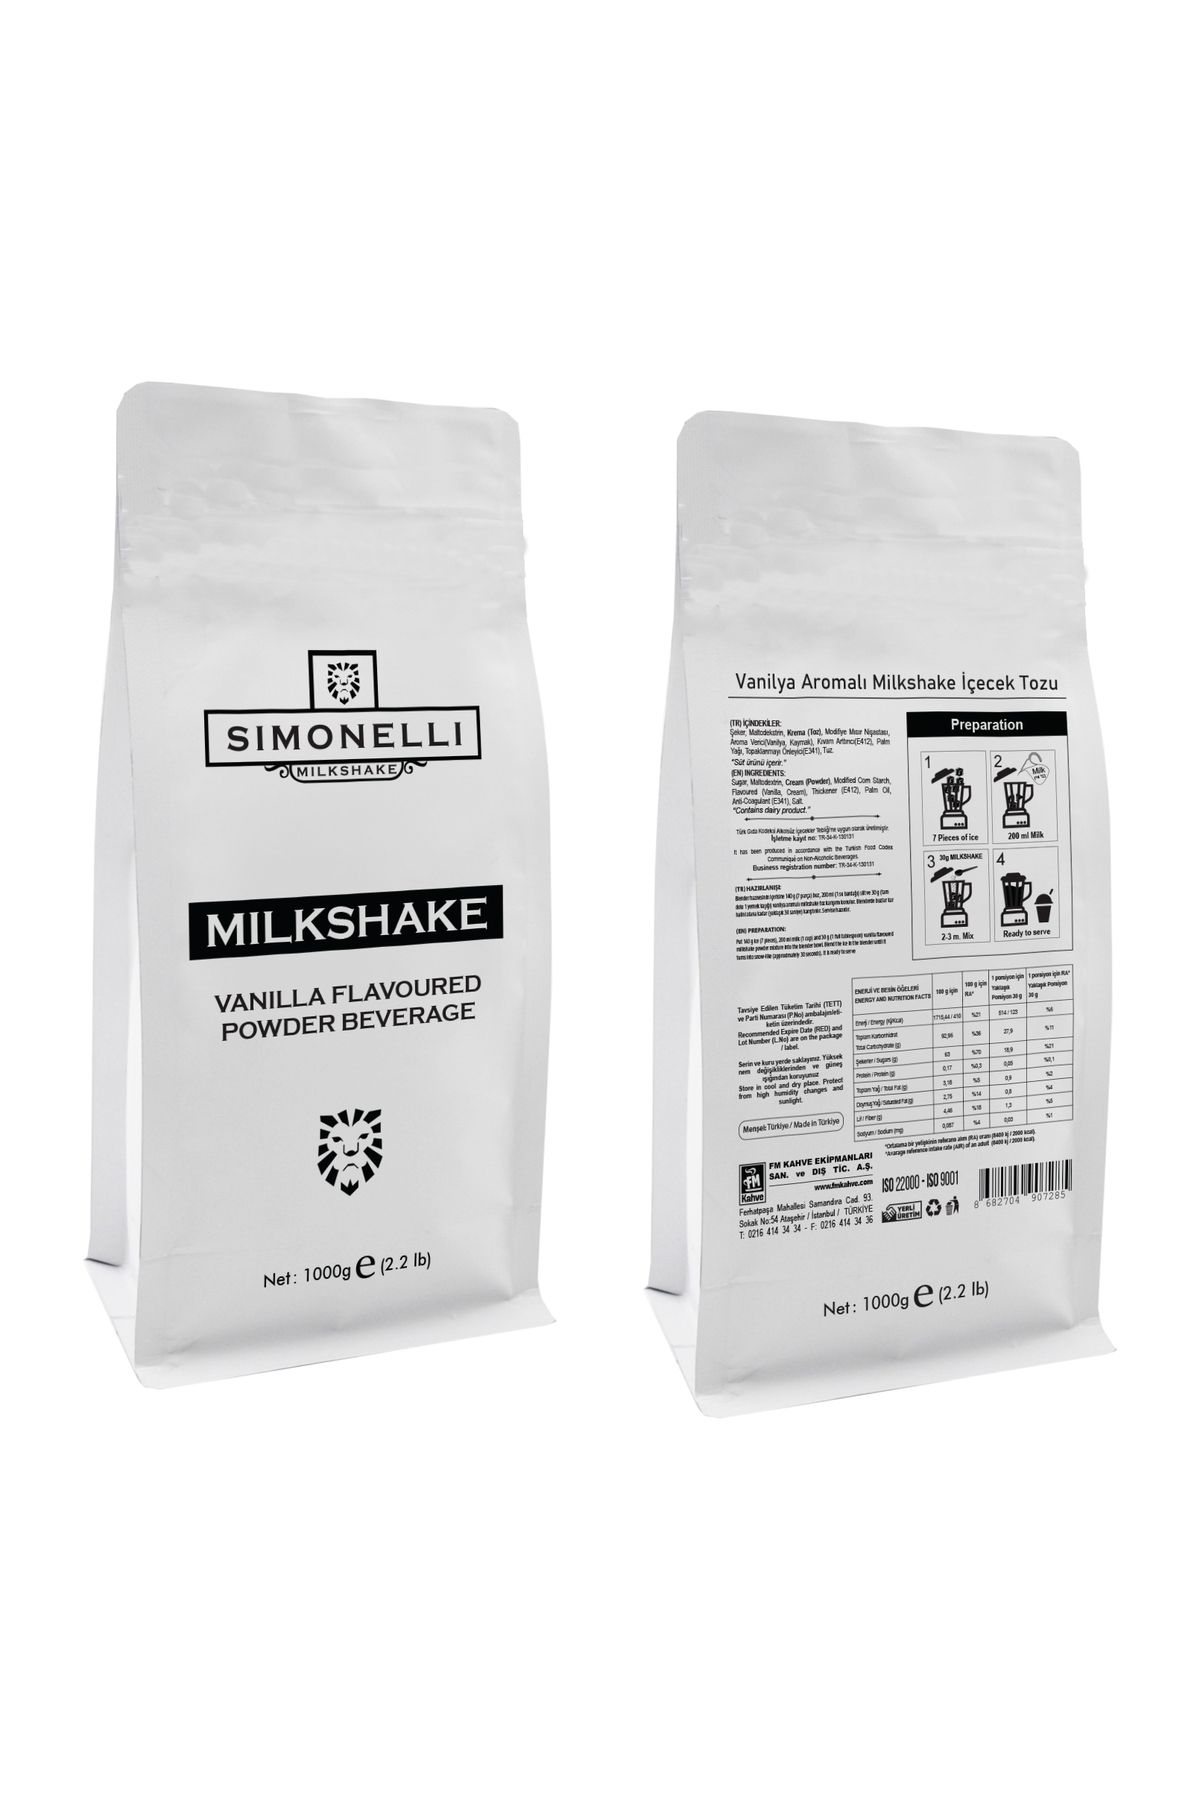 Simonelli Milkshake Vanilya Aromalı 1000g Paket